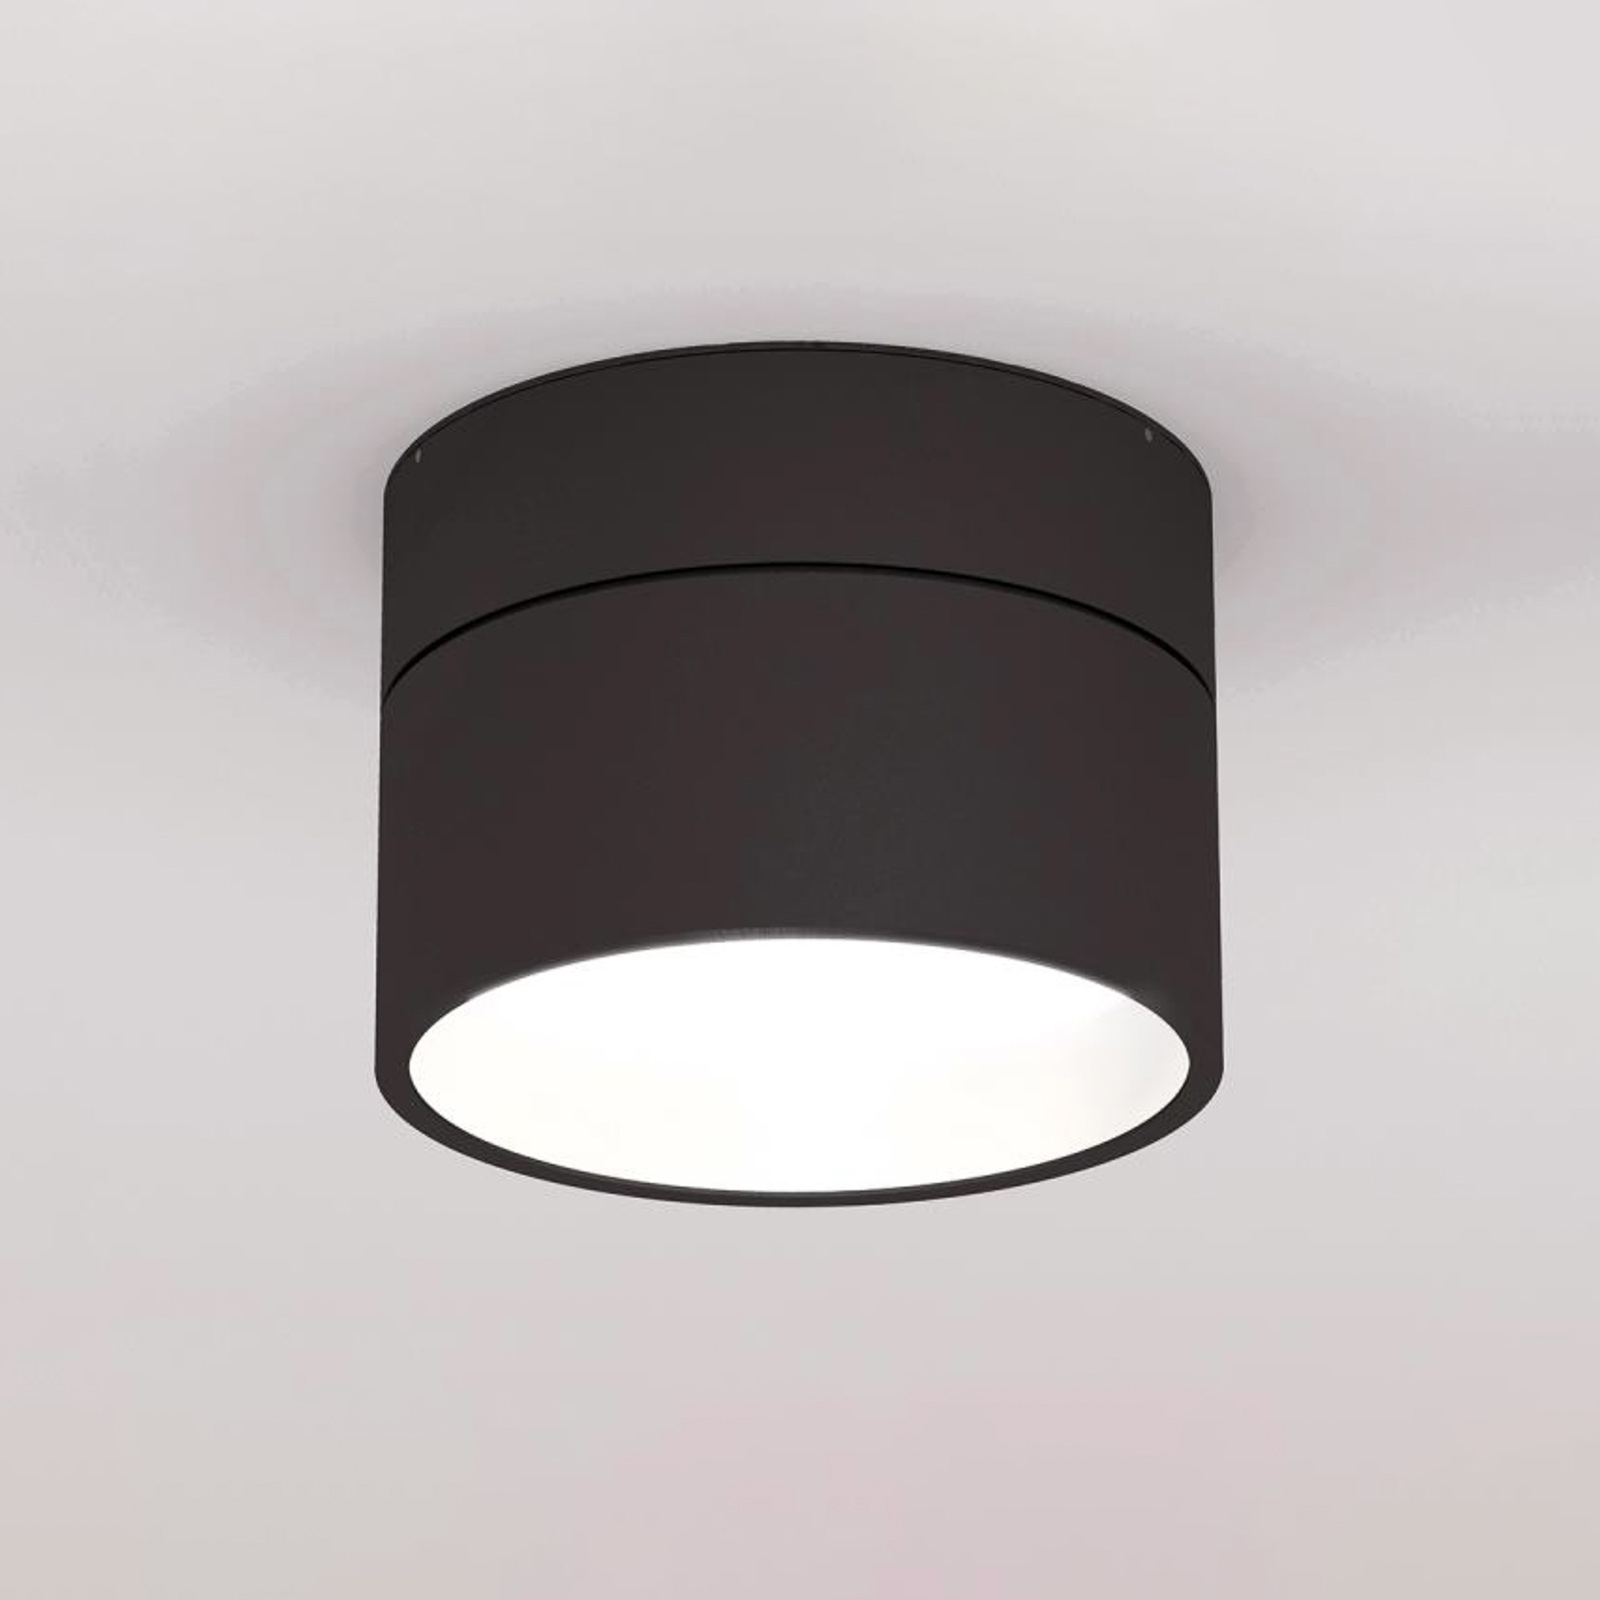 Turn on LED ceiling lamp dimmable 2700K black/white